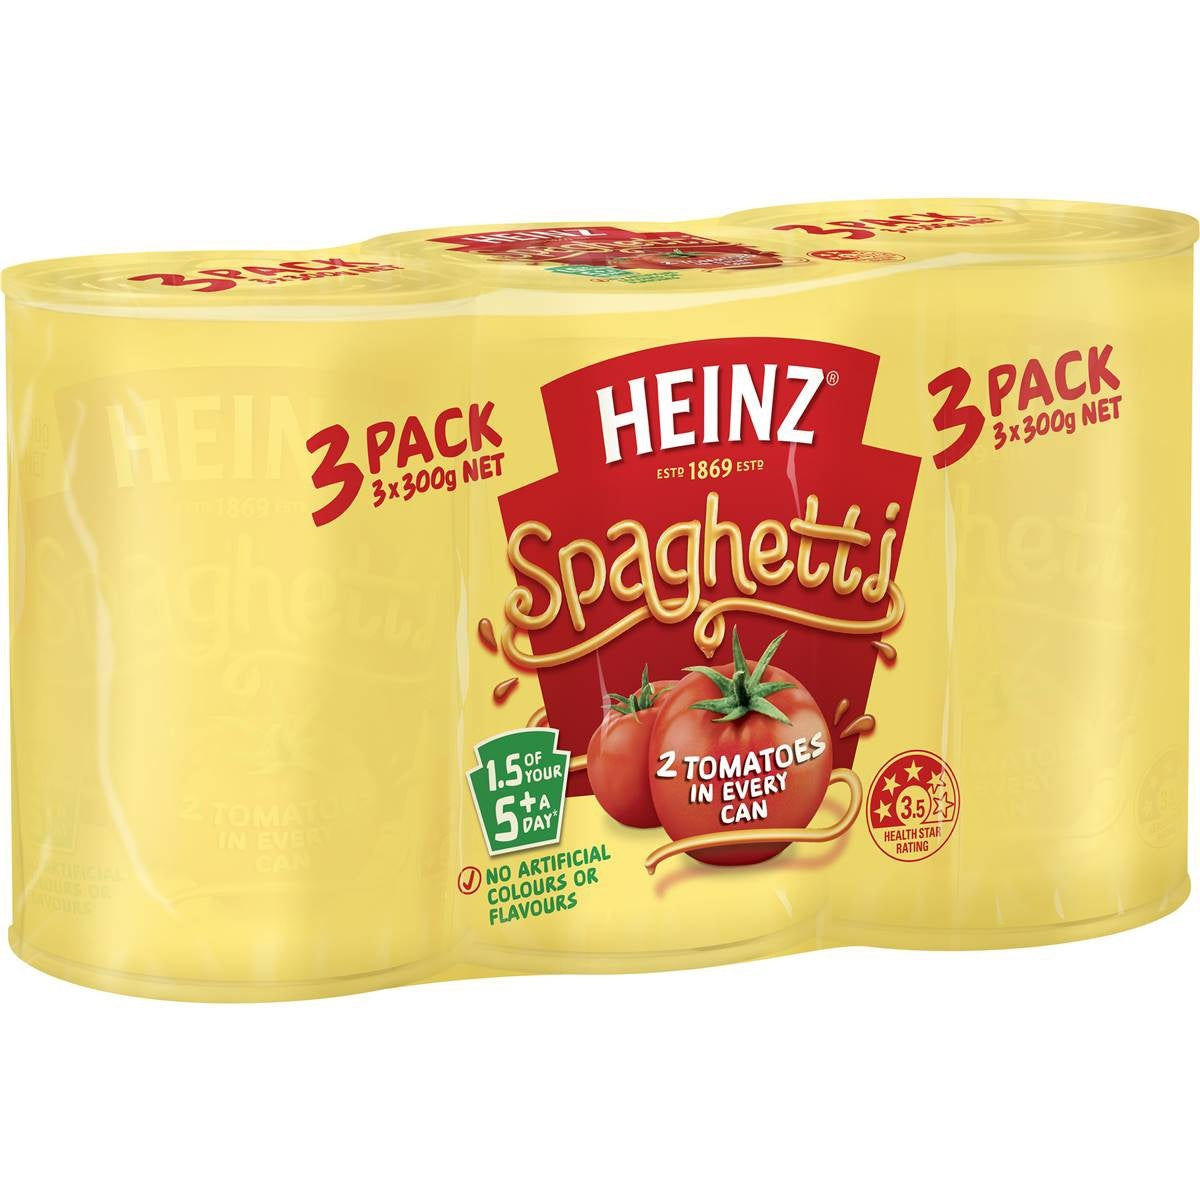 Heinz Spaghetti For Two 300g x 3pk